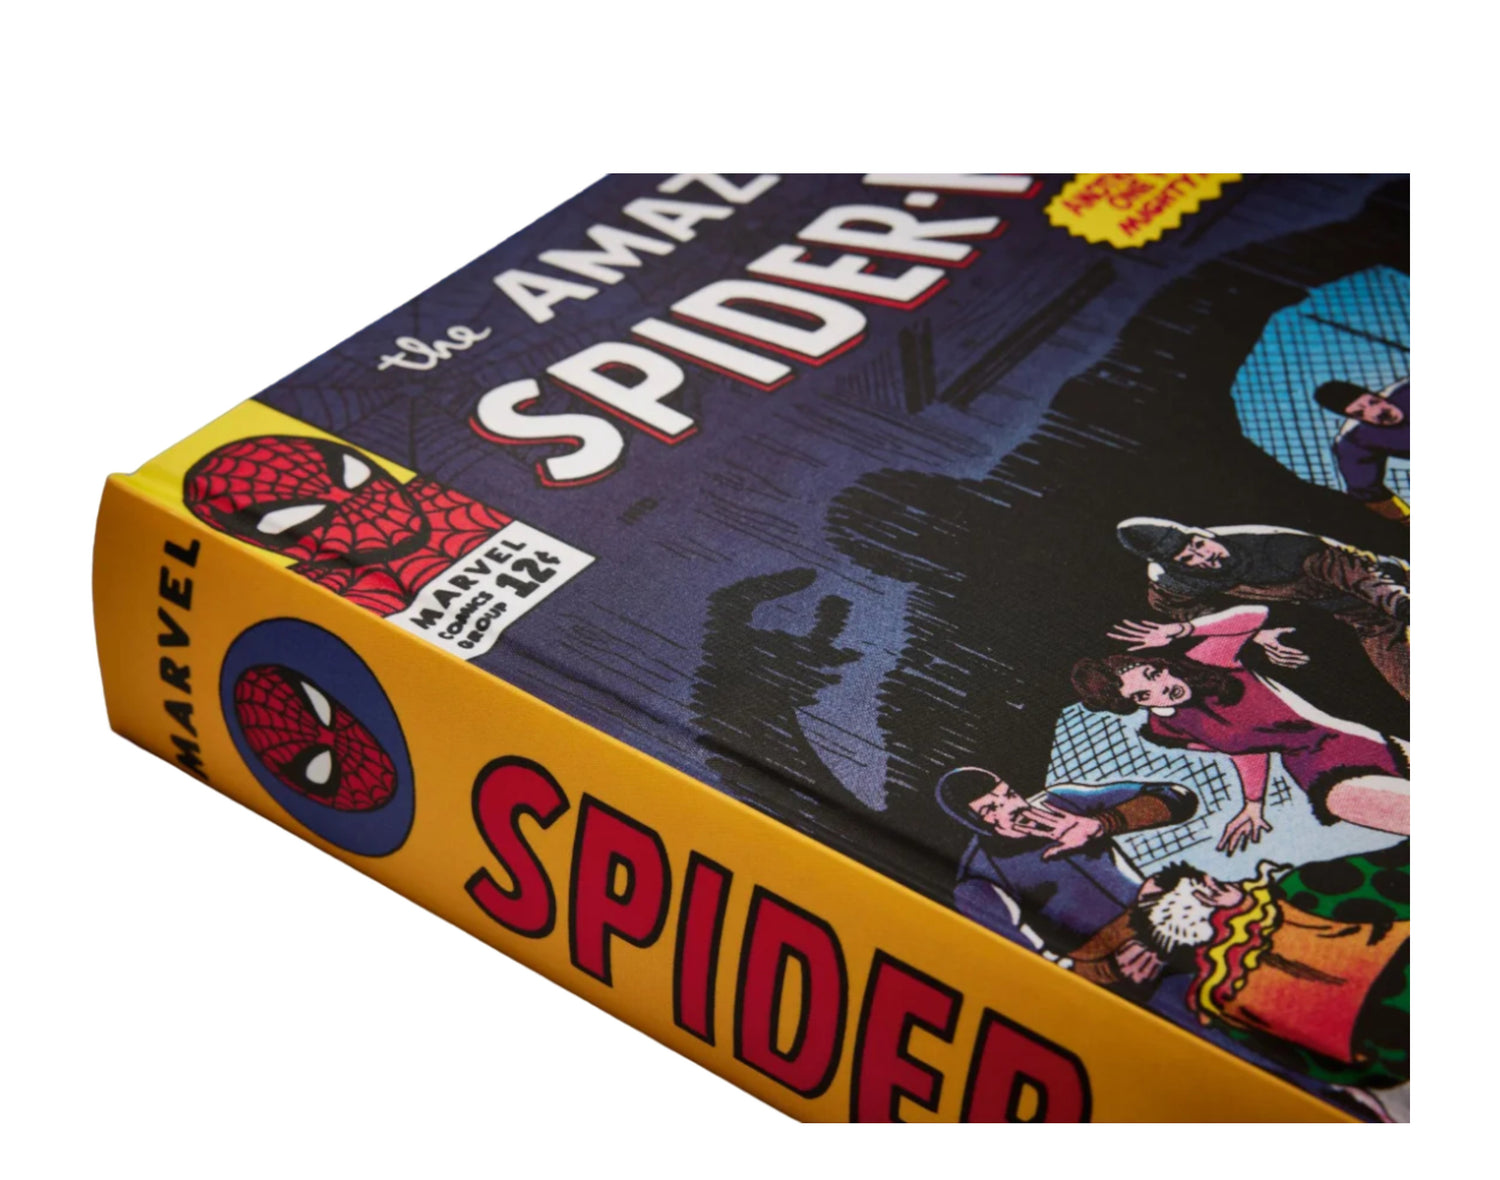 Taschen Books - Marvel Comics Library. Spider-Man. Vol. 2. 1965–1966 - Hardcover Book